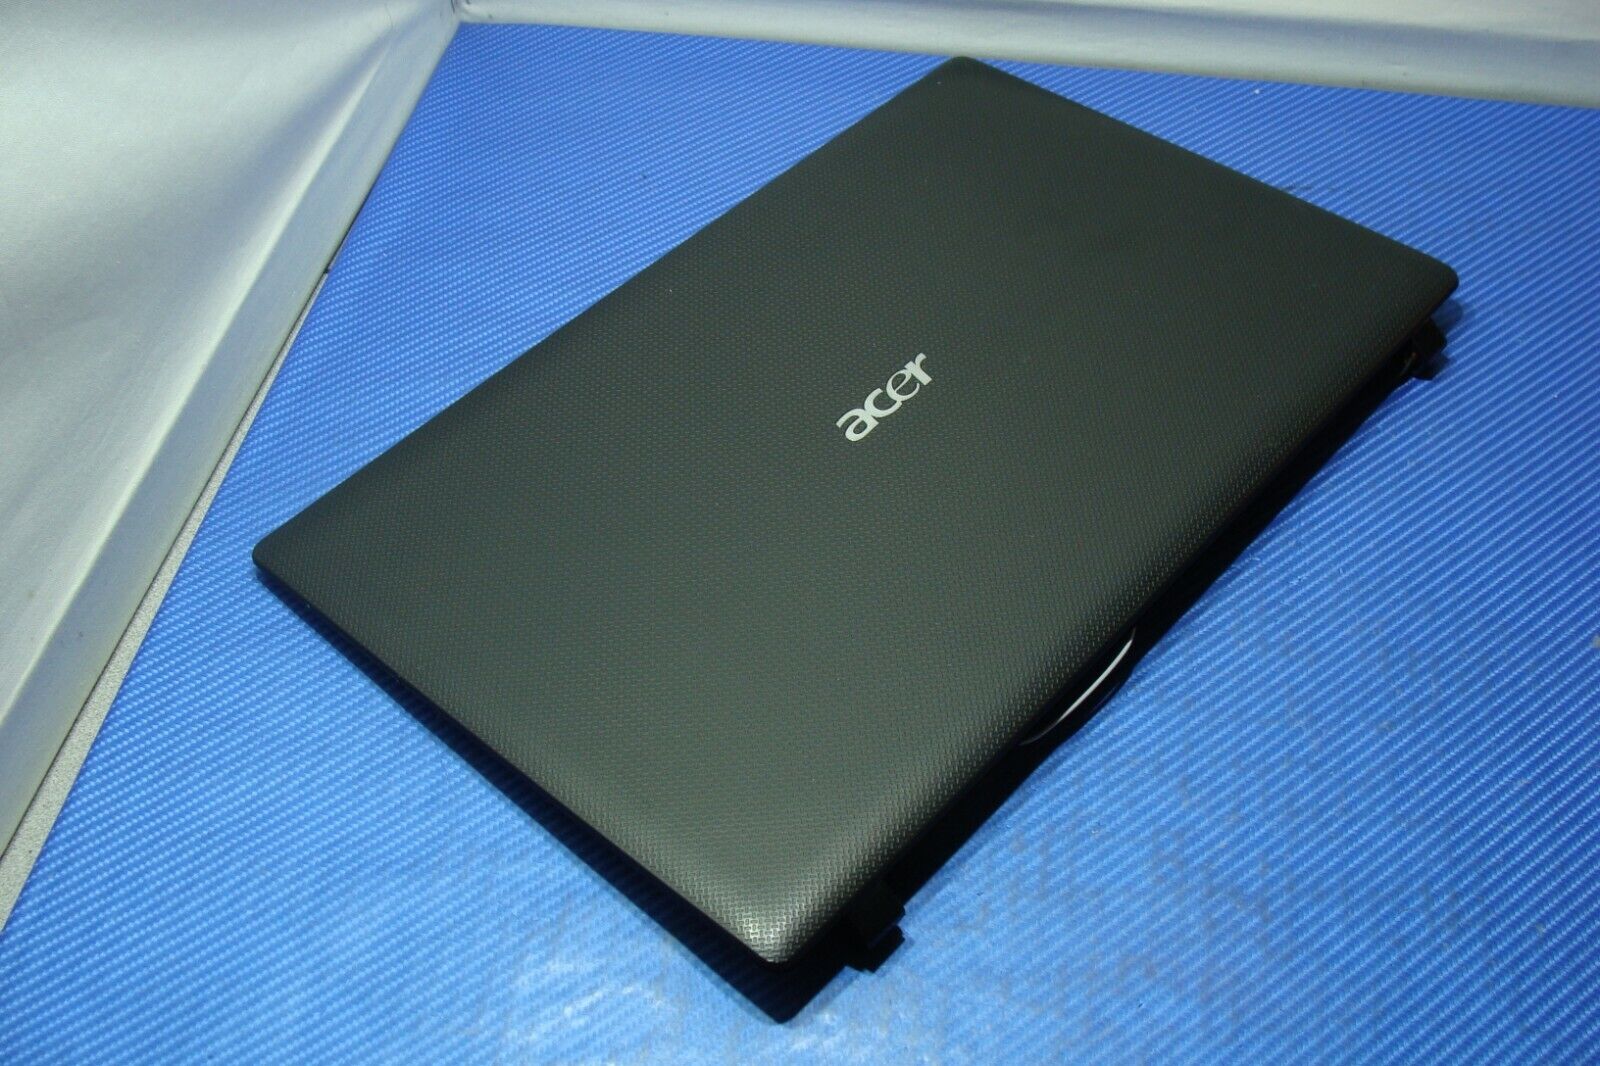 Acer Aspire 15.6 5742-6811 OEM Laptop LCD Back Cover w/Front Bezel AP0FO000910